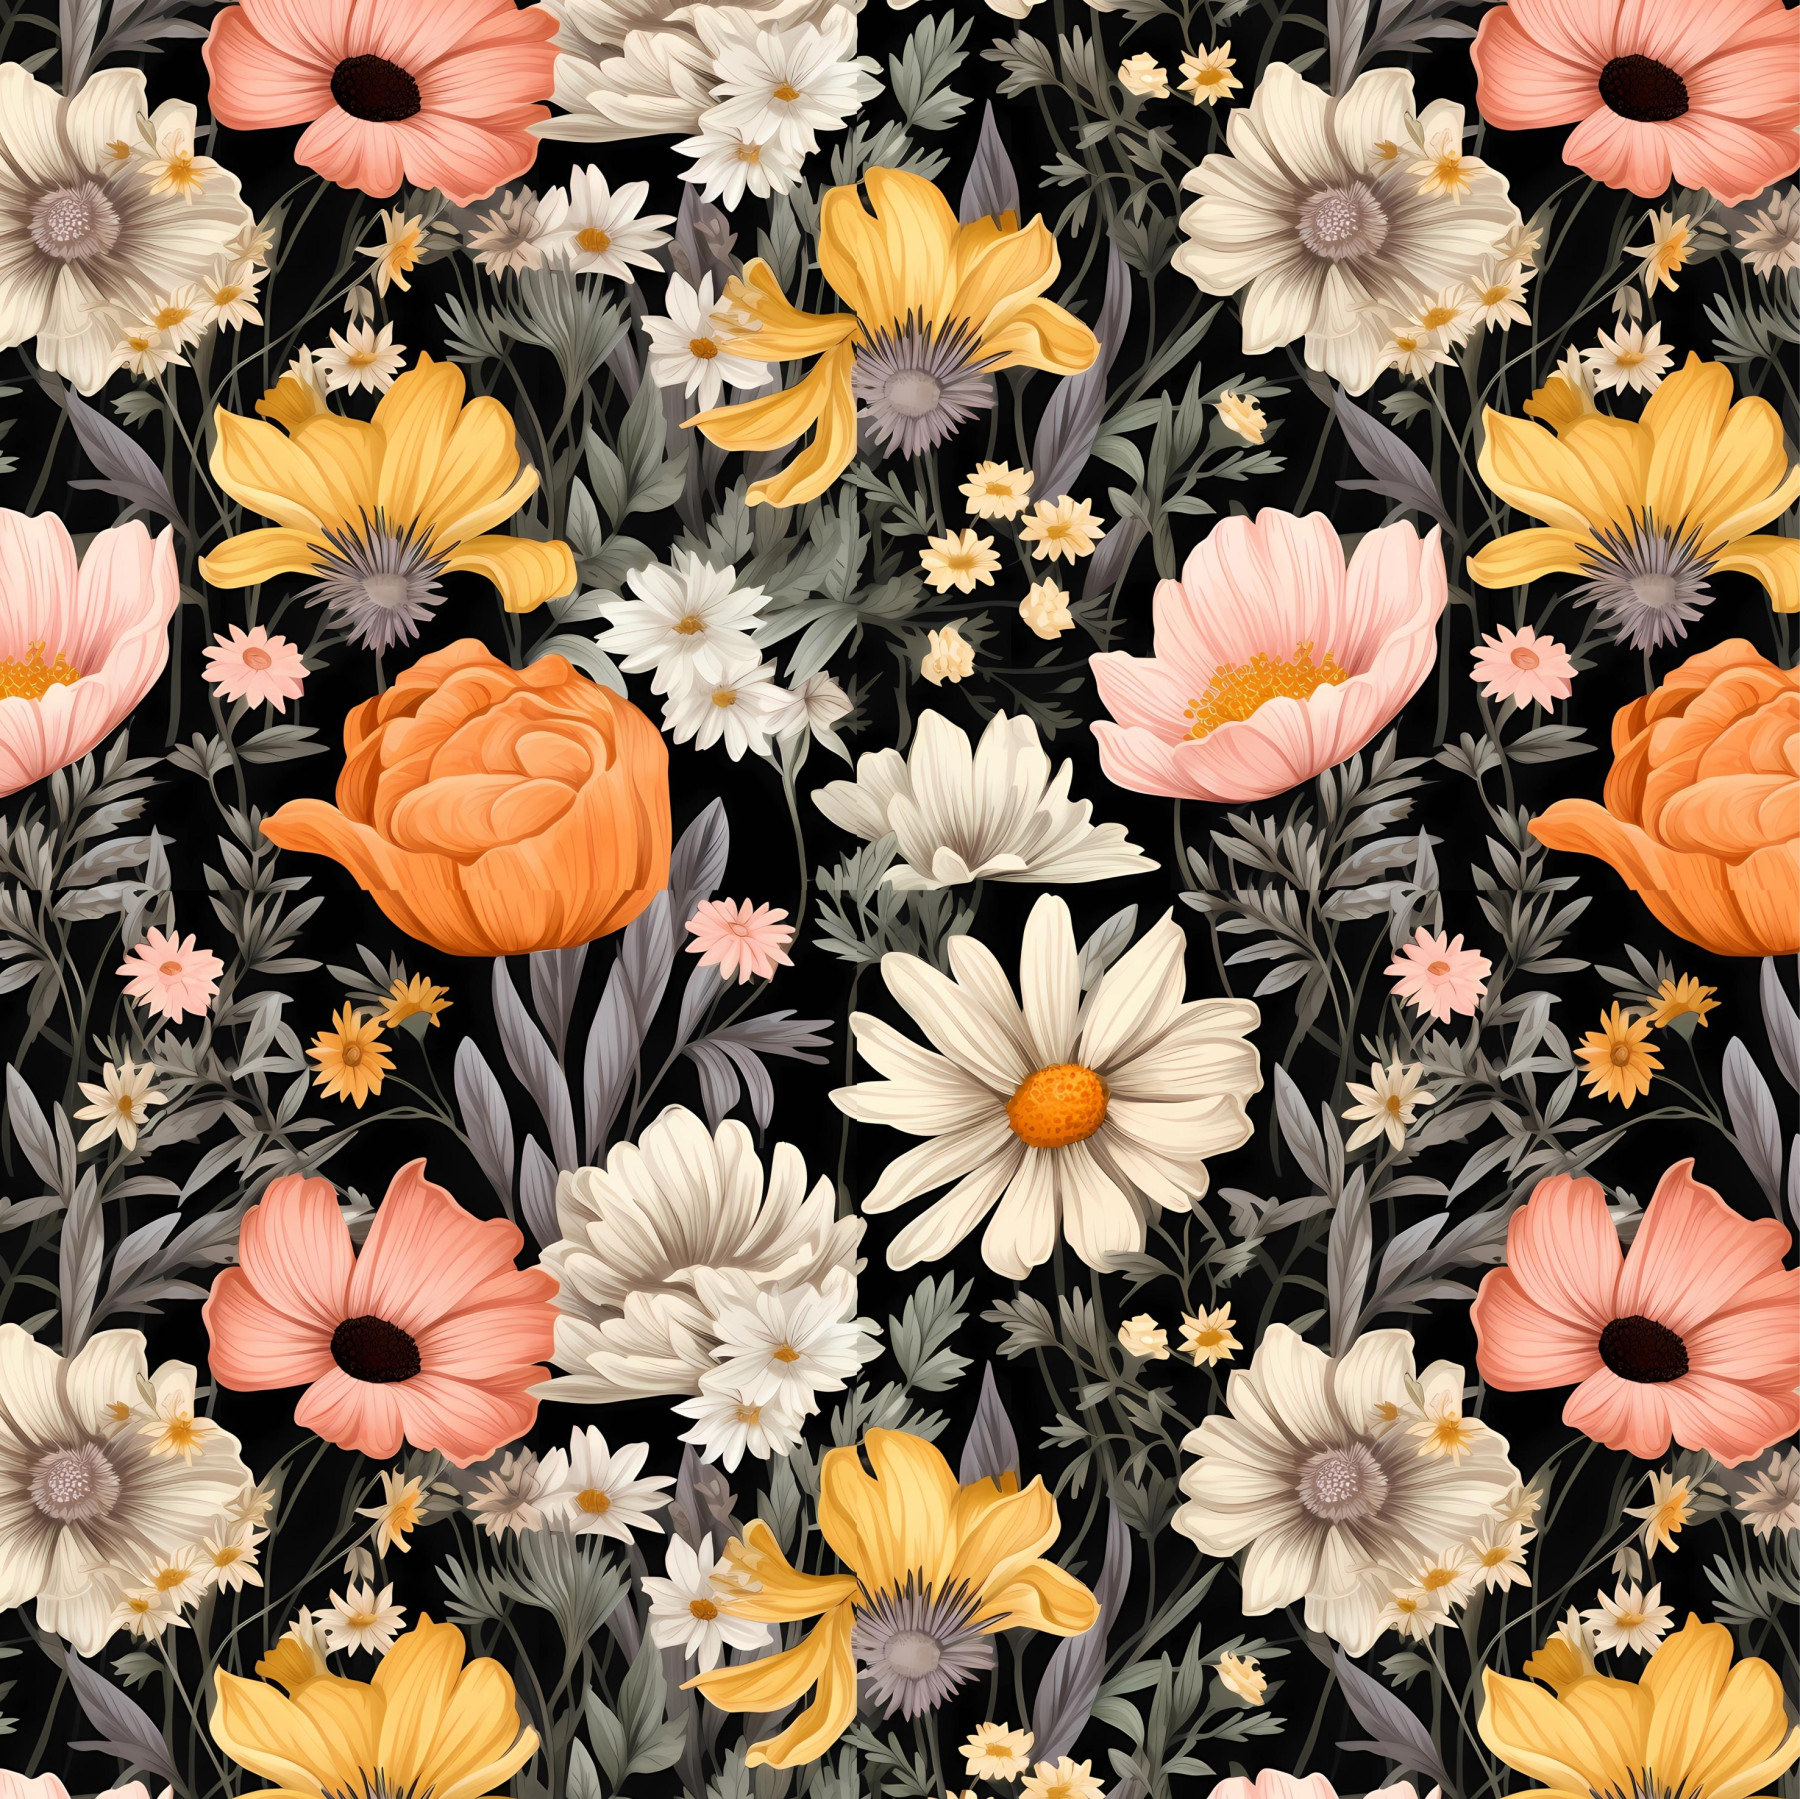 FLOWERS wz.6 - PERKAL Cotton fabric